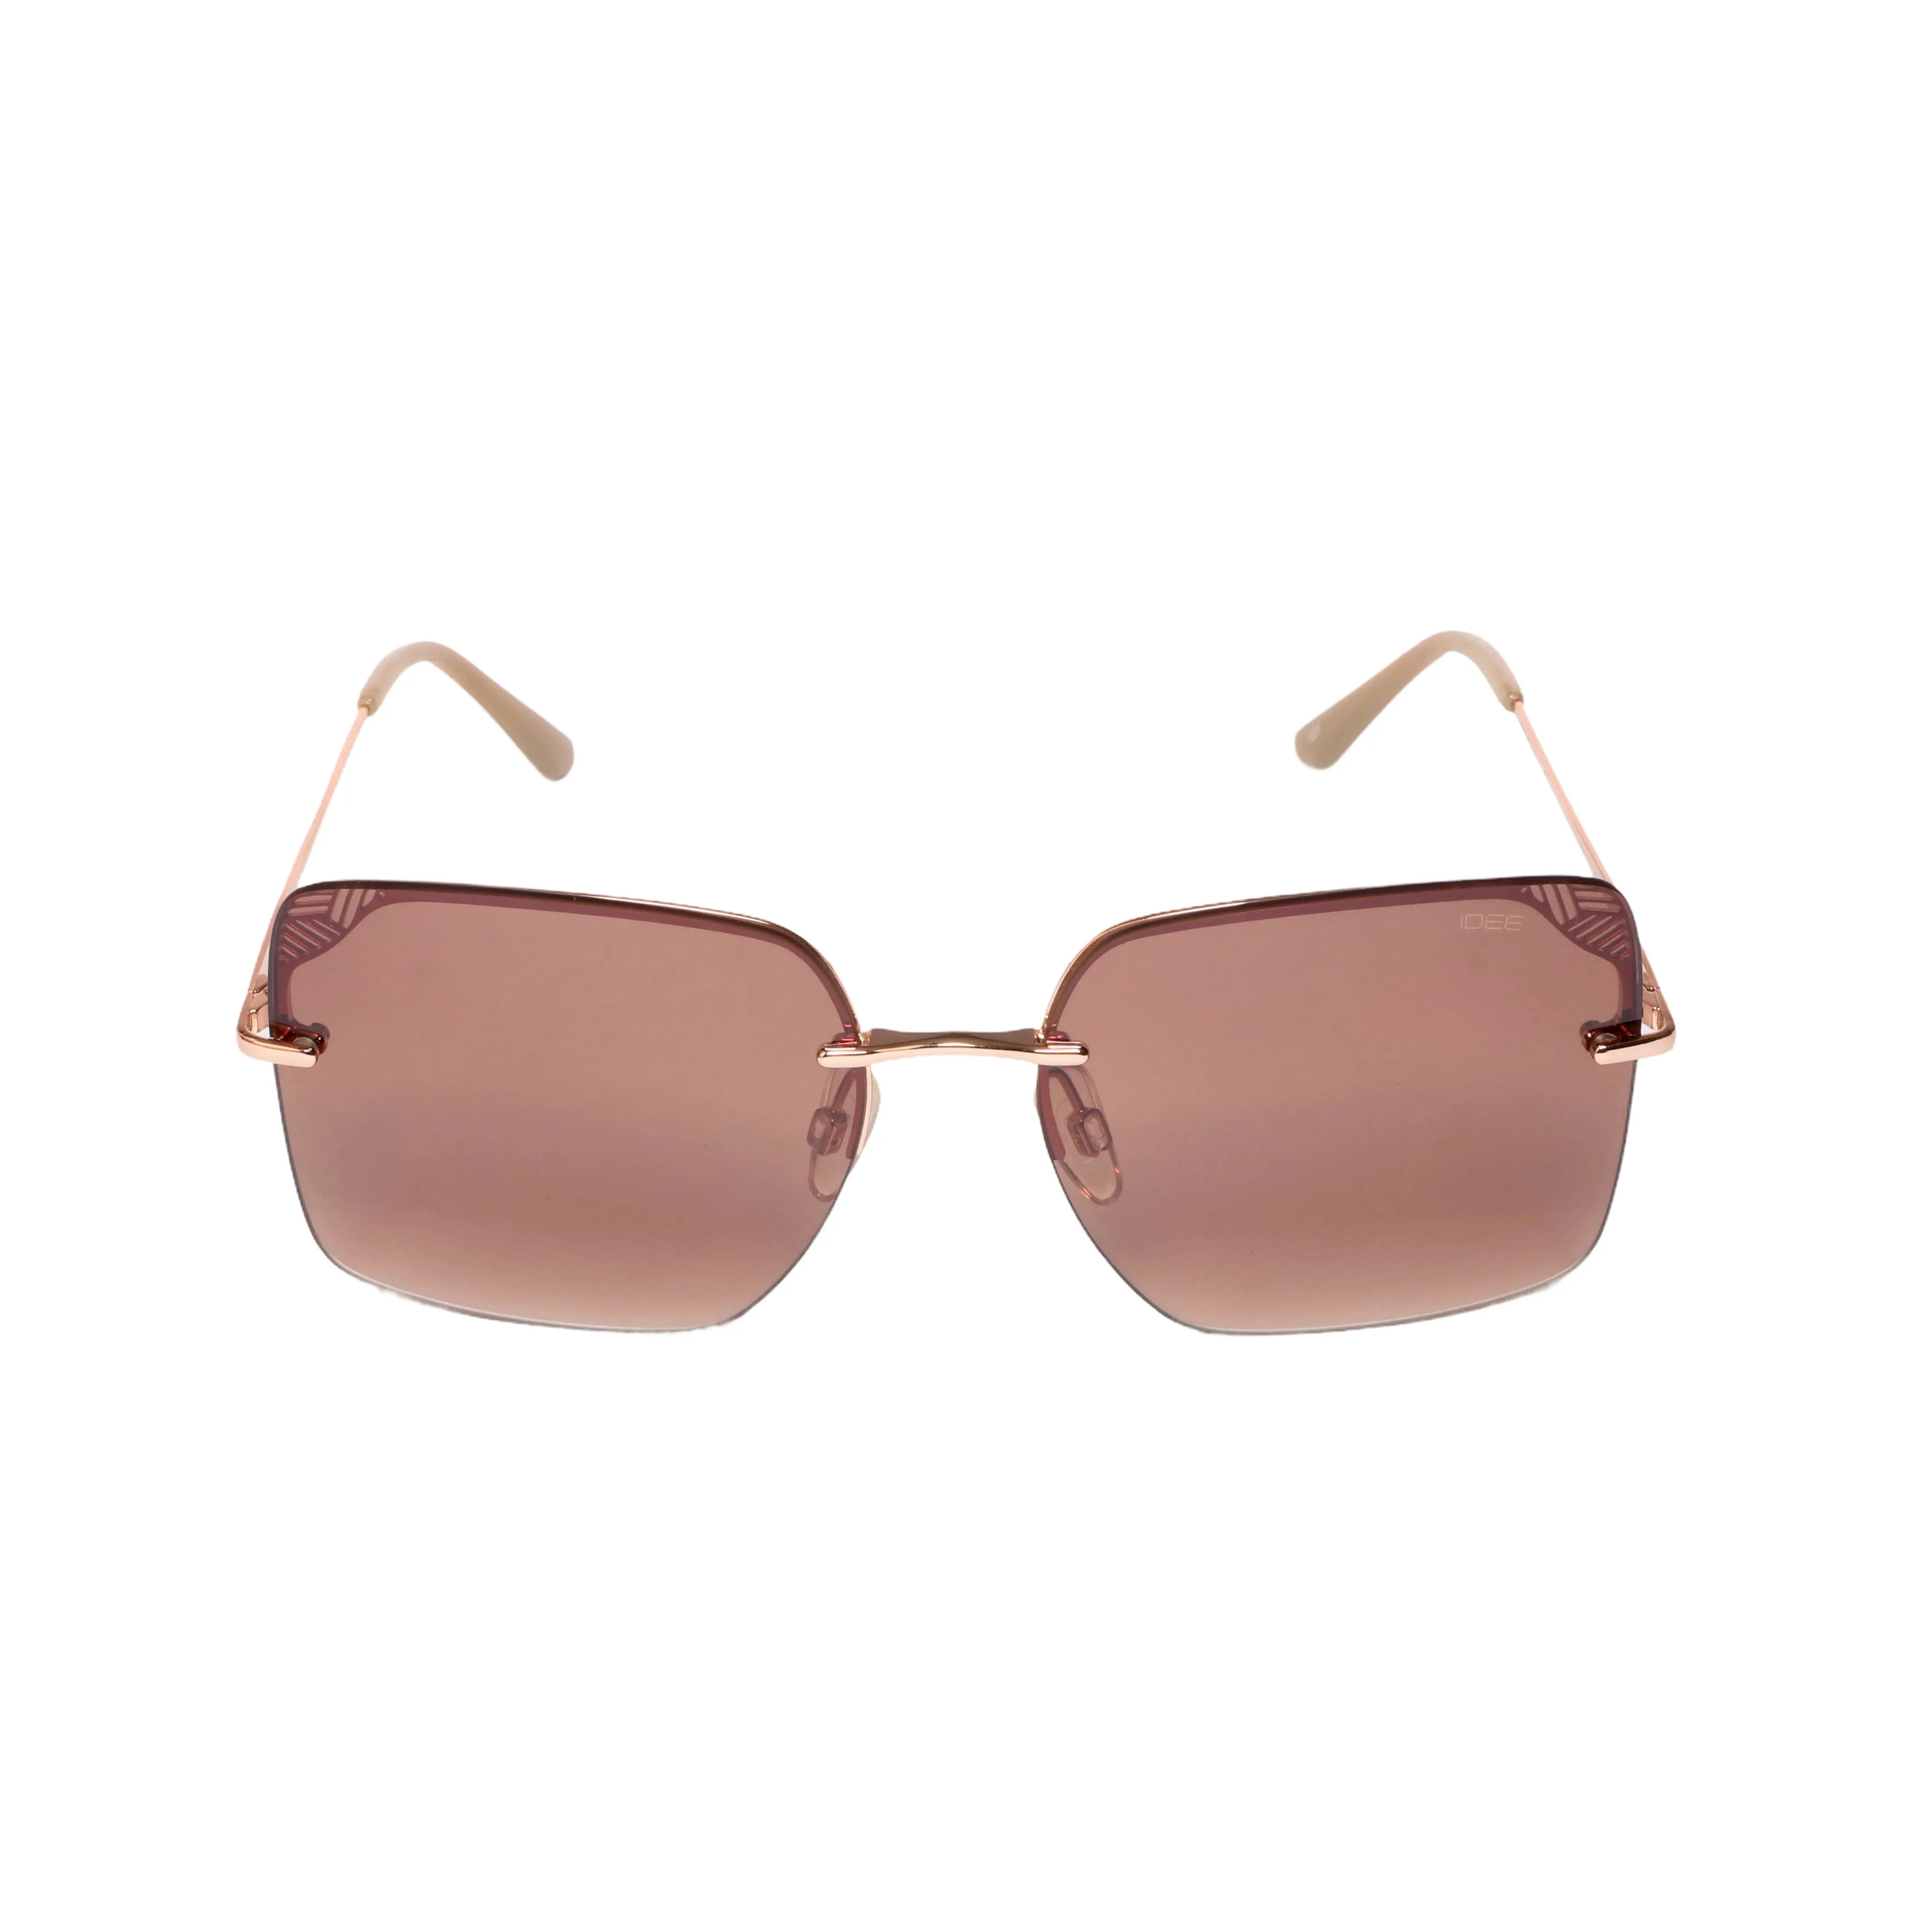 IDEE-S2805--C1 Sunglasses - Premium Sunglasses from IDEE - Just Rs. 4380! Shop now at Laxmi Opticians